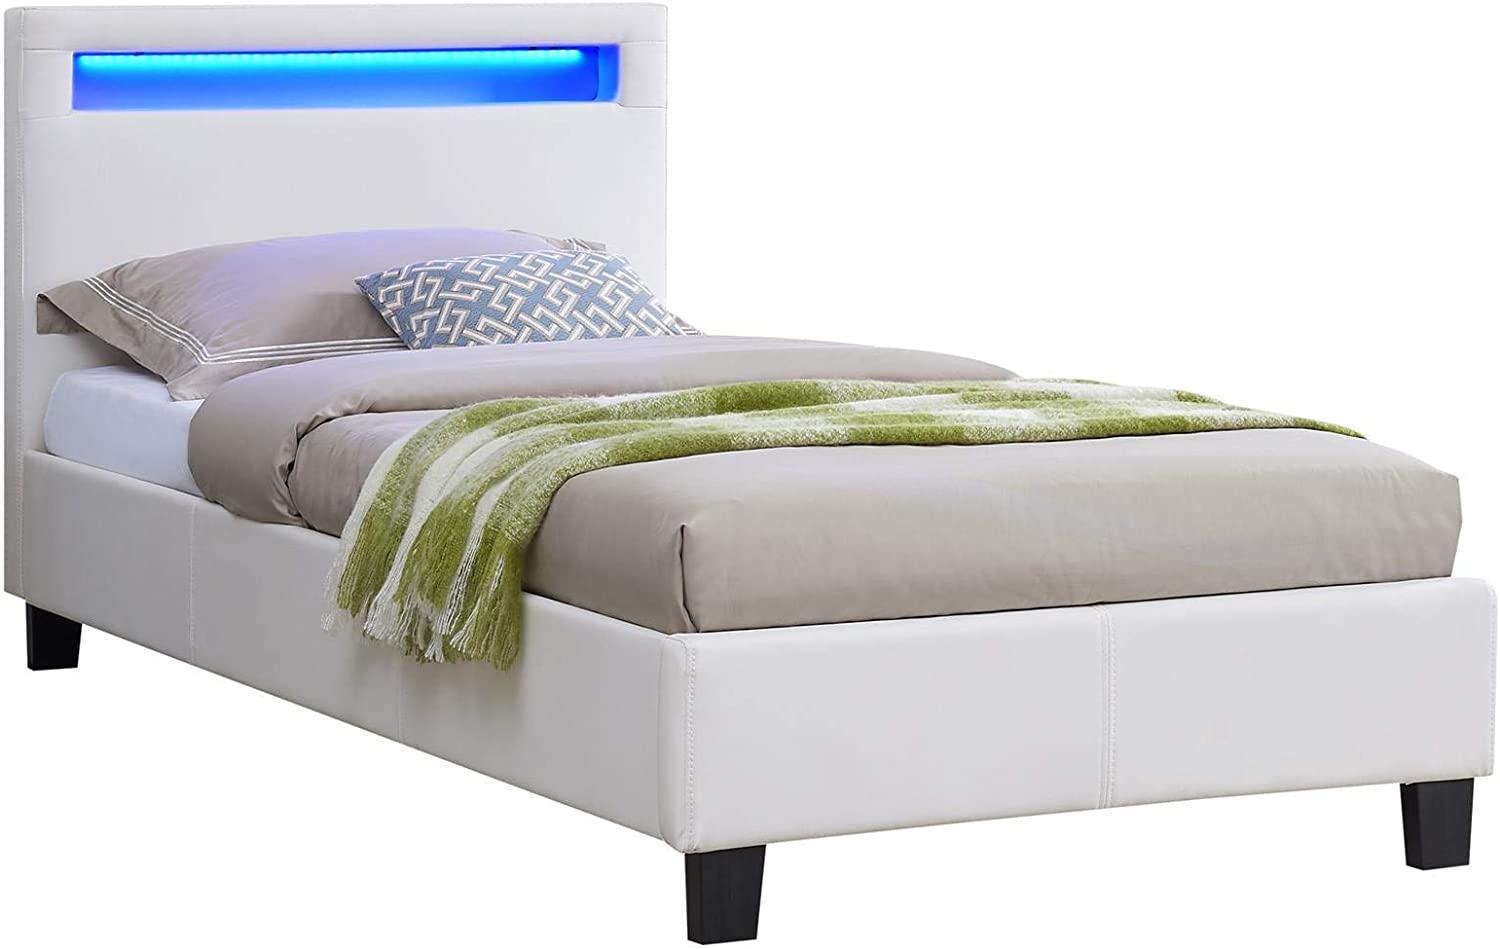 CARO-Möbel Polsterbett Mandalay mit LED Beleuchtung Einzelbett Lederbett 90 x 200 cm mit Lattenrahmen, Lederimitat in weiß Bild 1